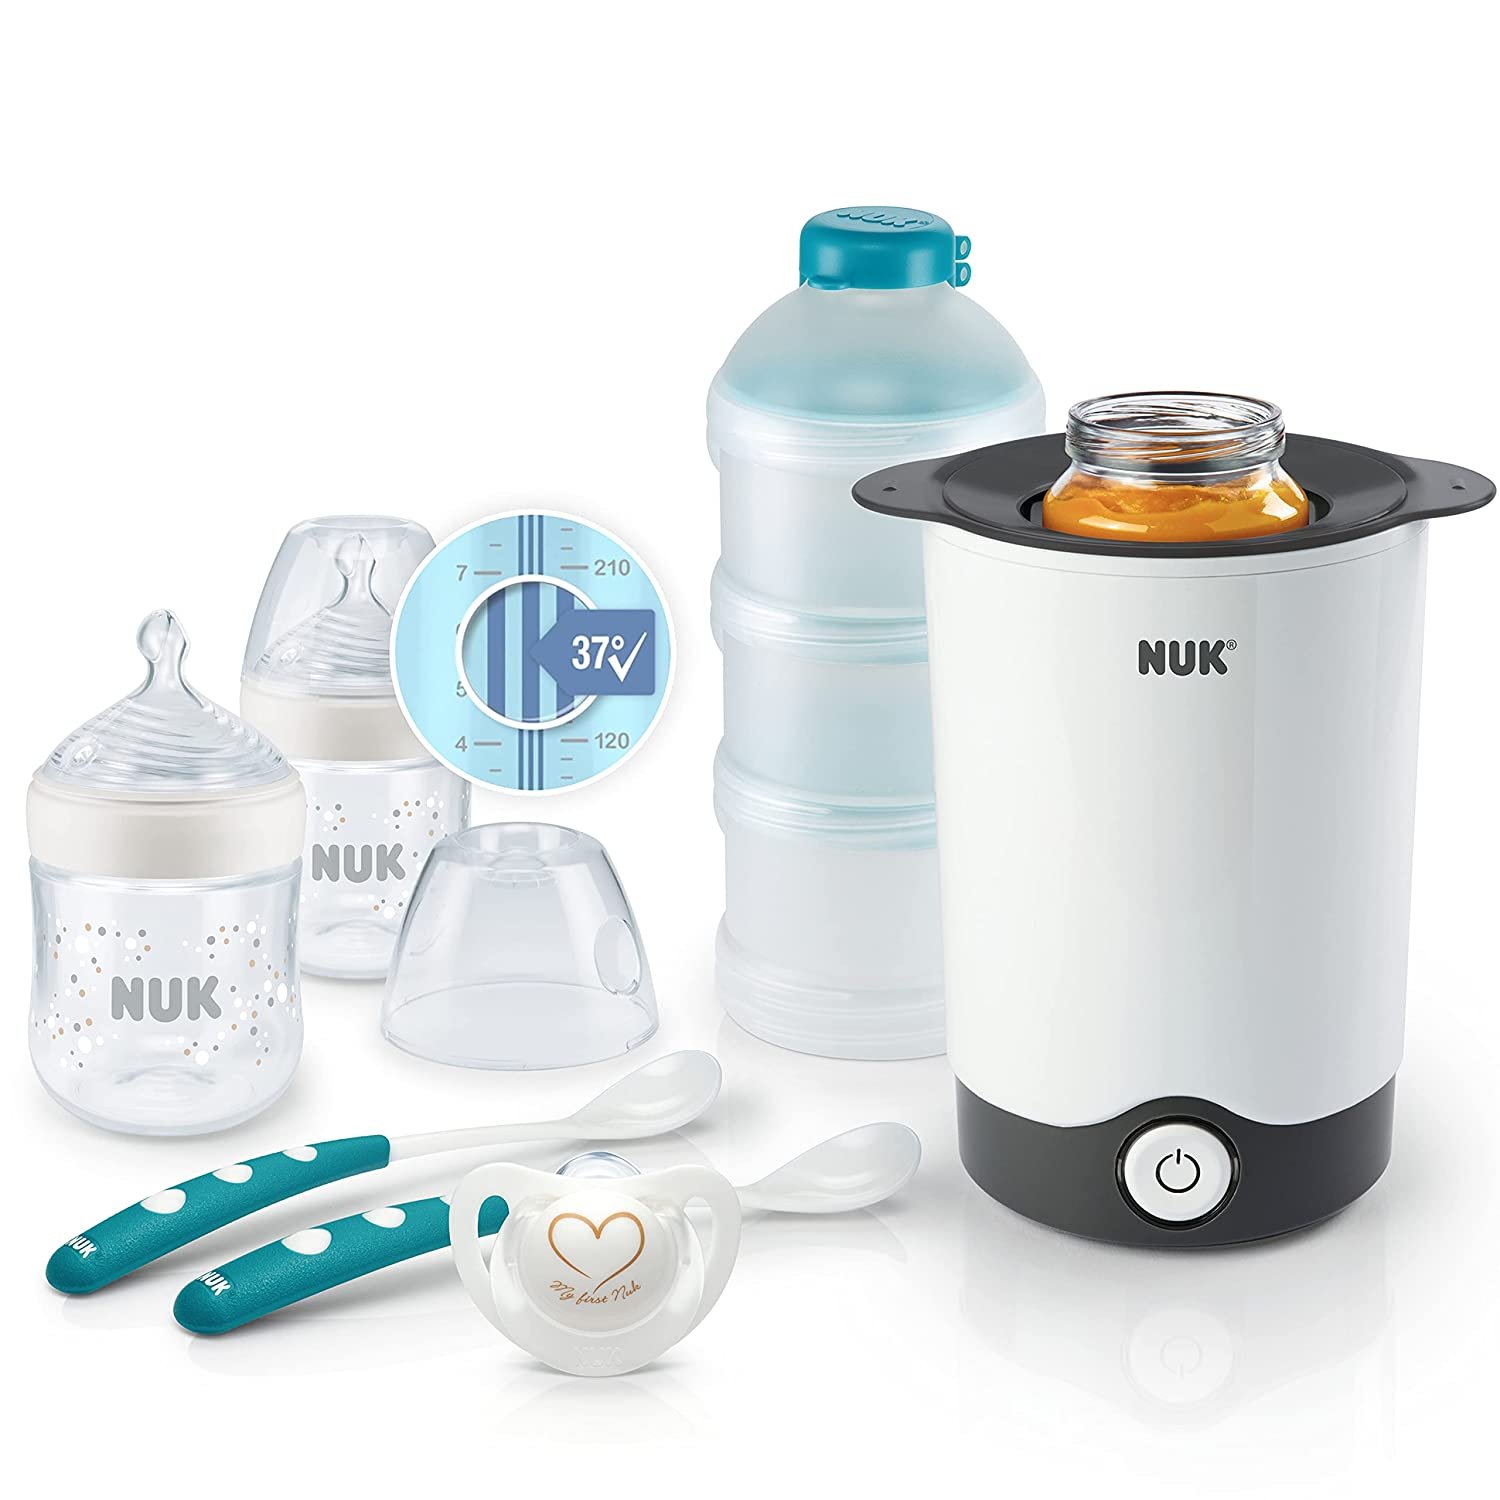 Amazon offer - NUK feeding bottle set